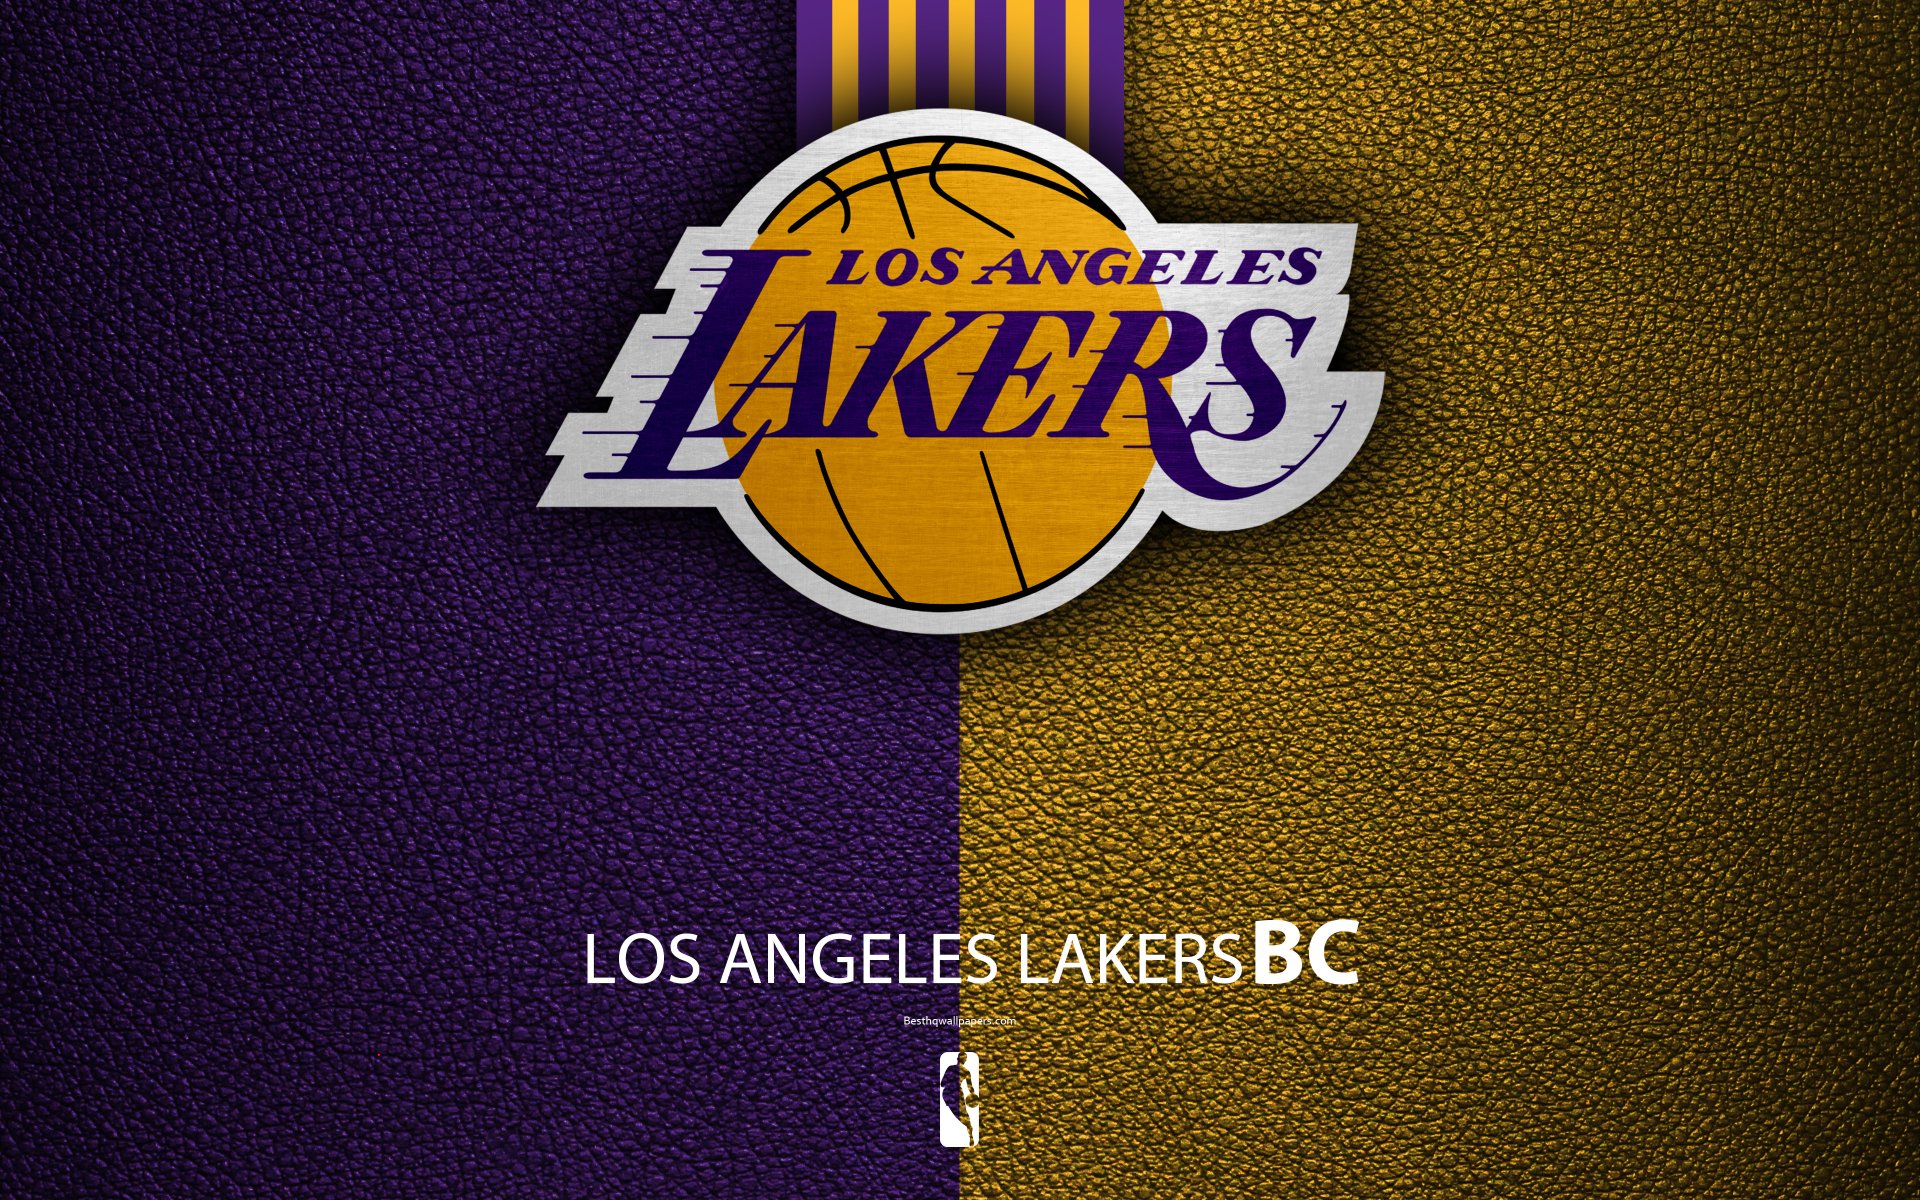 La lakers. Баскетбольный клуб Лос-Анджелес Лейкерс лого. Лос Анджелес Лейкерс эмблема. Баскетбольная команда Лос Анджелес Лейкерс. Баскетбольная команда Лейкерс логотип.